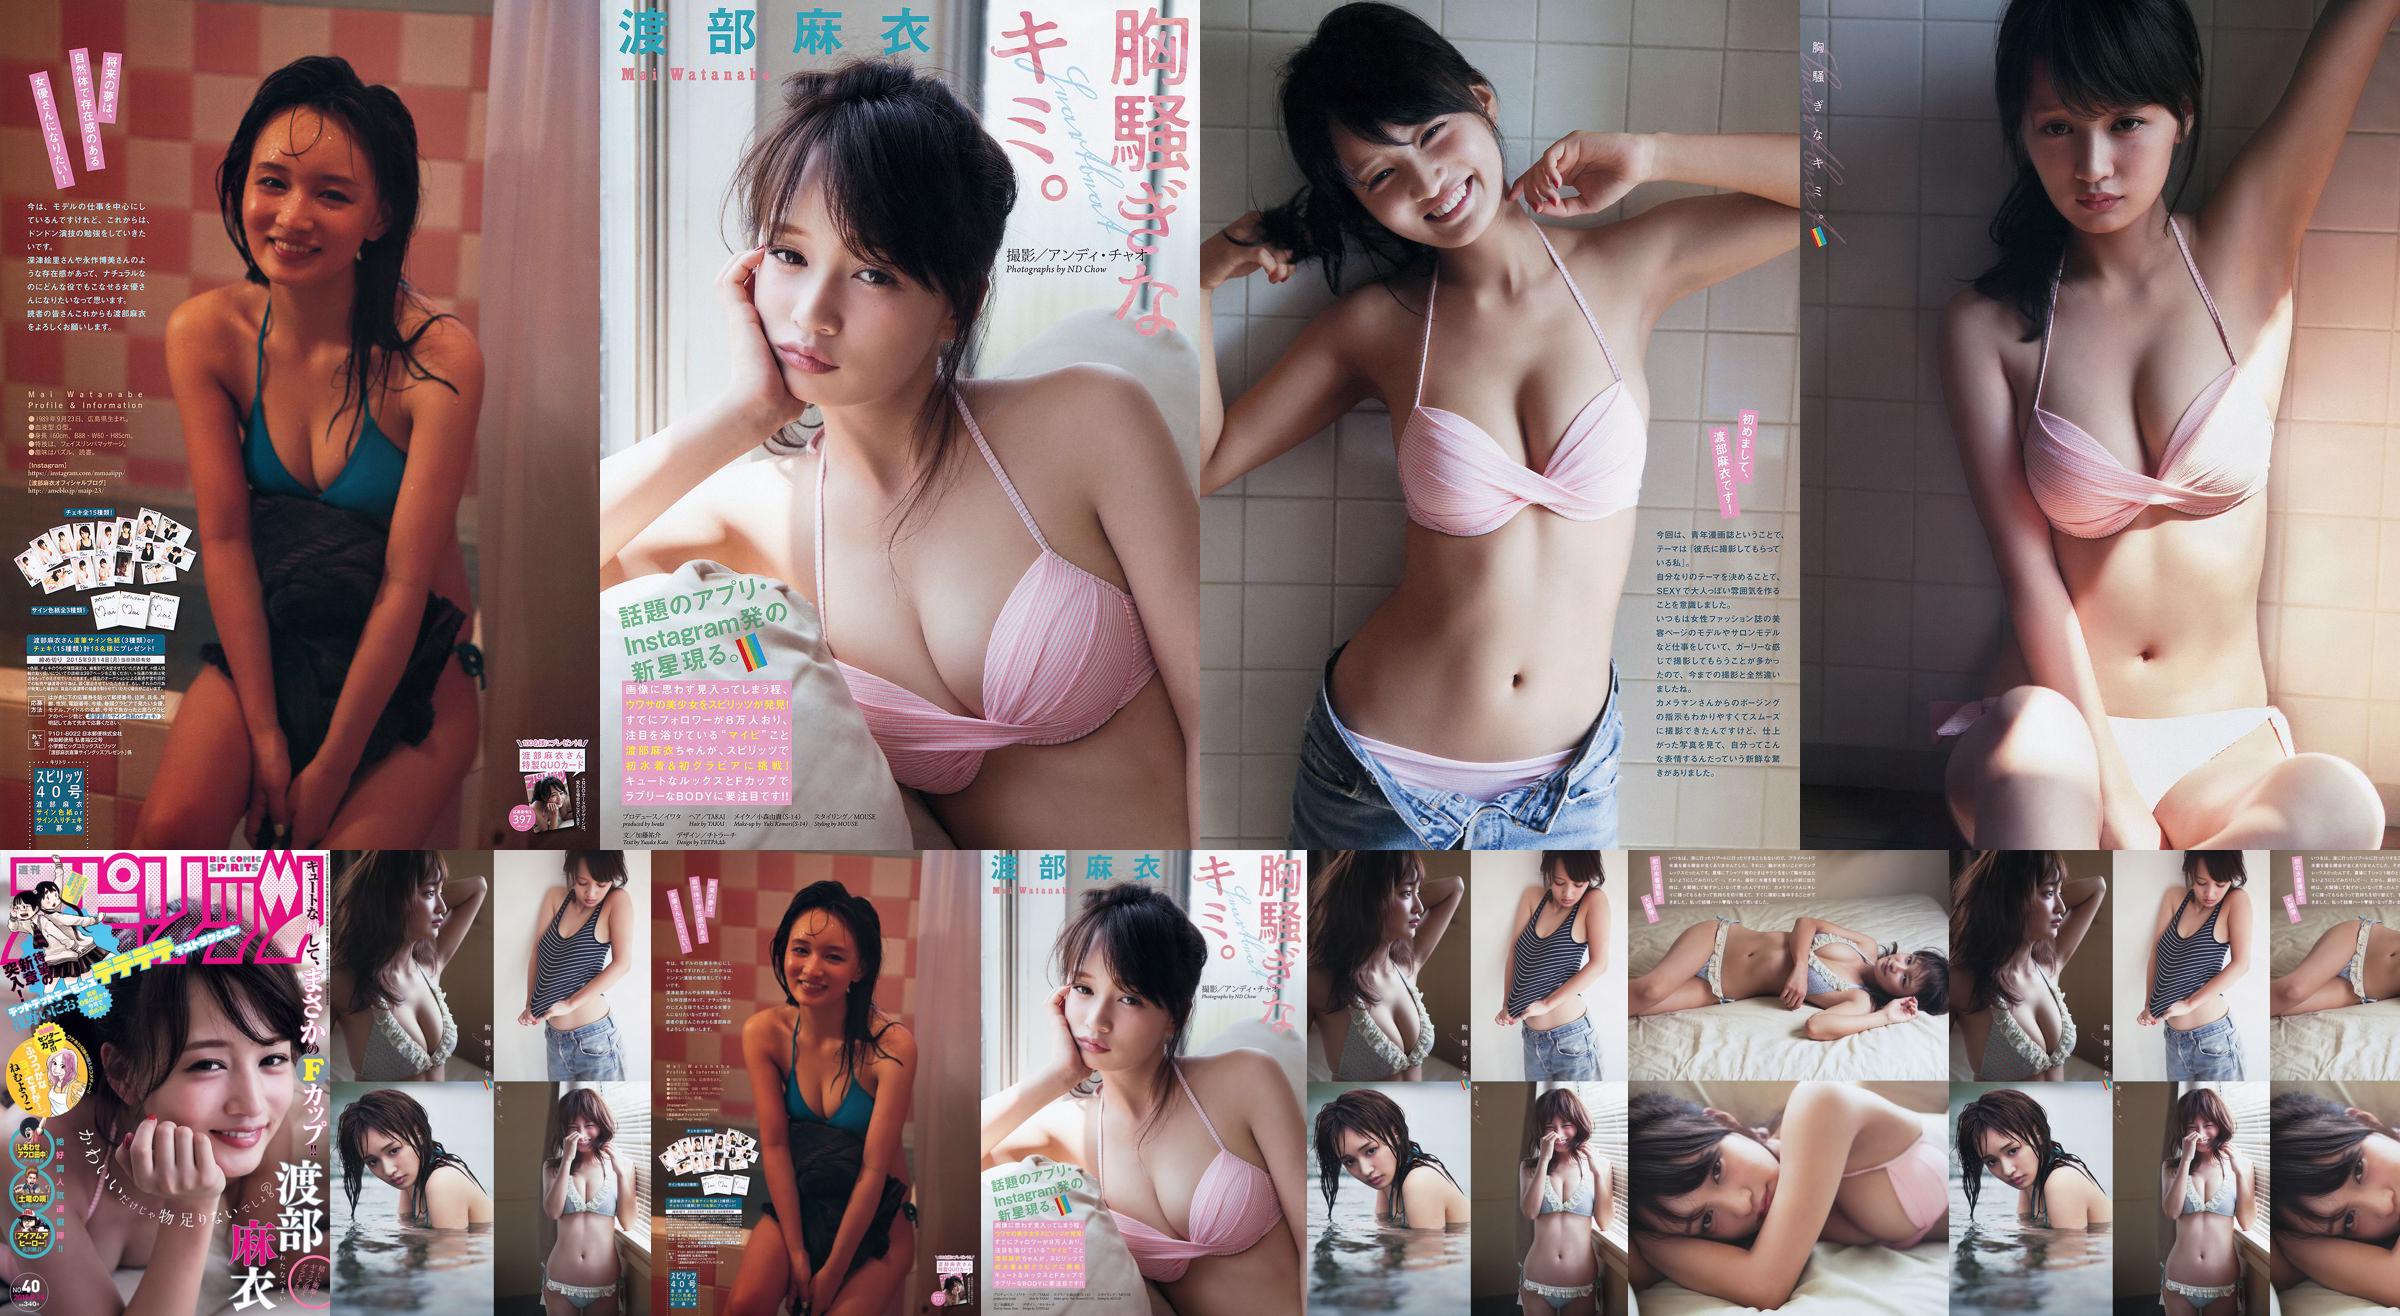 [Wöchentliche große Comic-Spirituosen] Watanabe Mai 2015 Nr. 40 Fotomagazin No.70e785 Seite 2